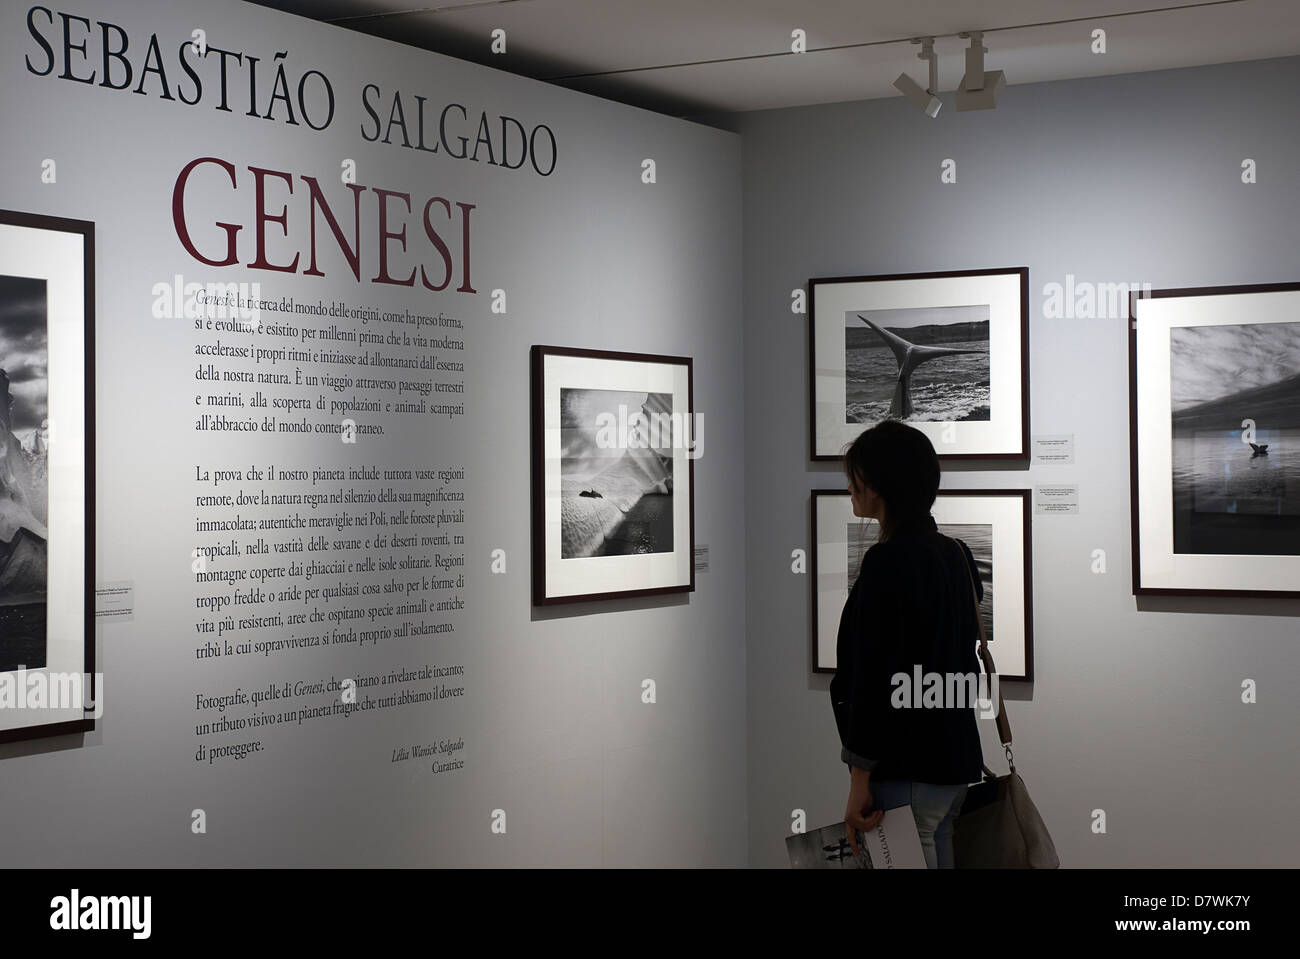 Mostra 'GENESIS' del fotografo brasiliano Sebastiao Salgado. Museo dell'Ara Pacis, Roma, Italia. Foto Stock